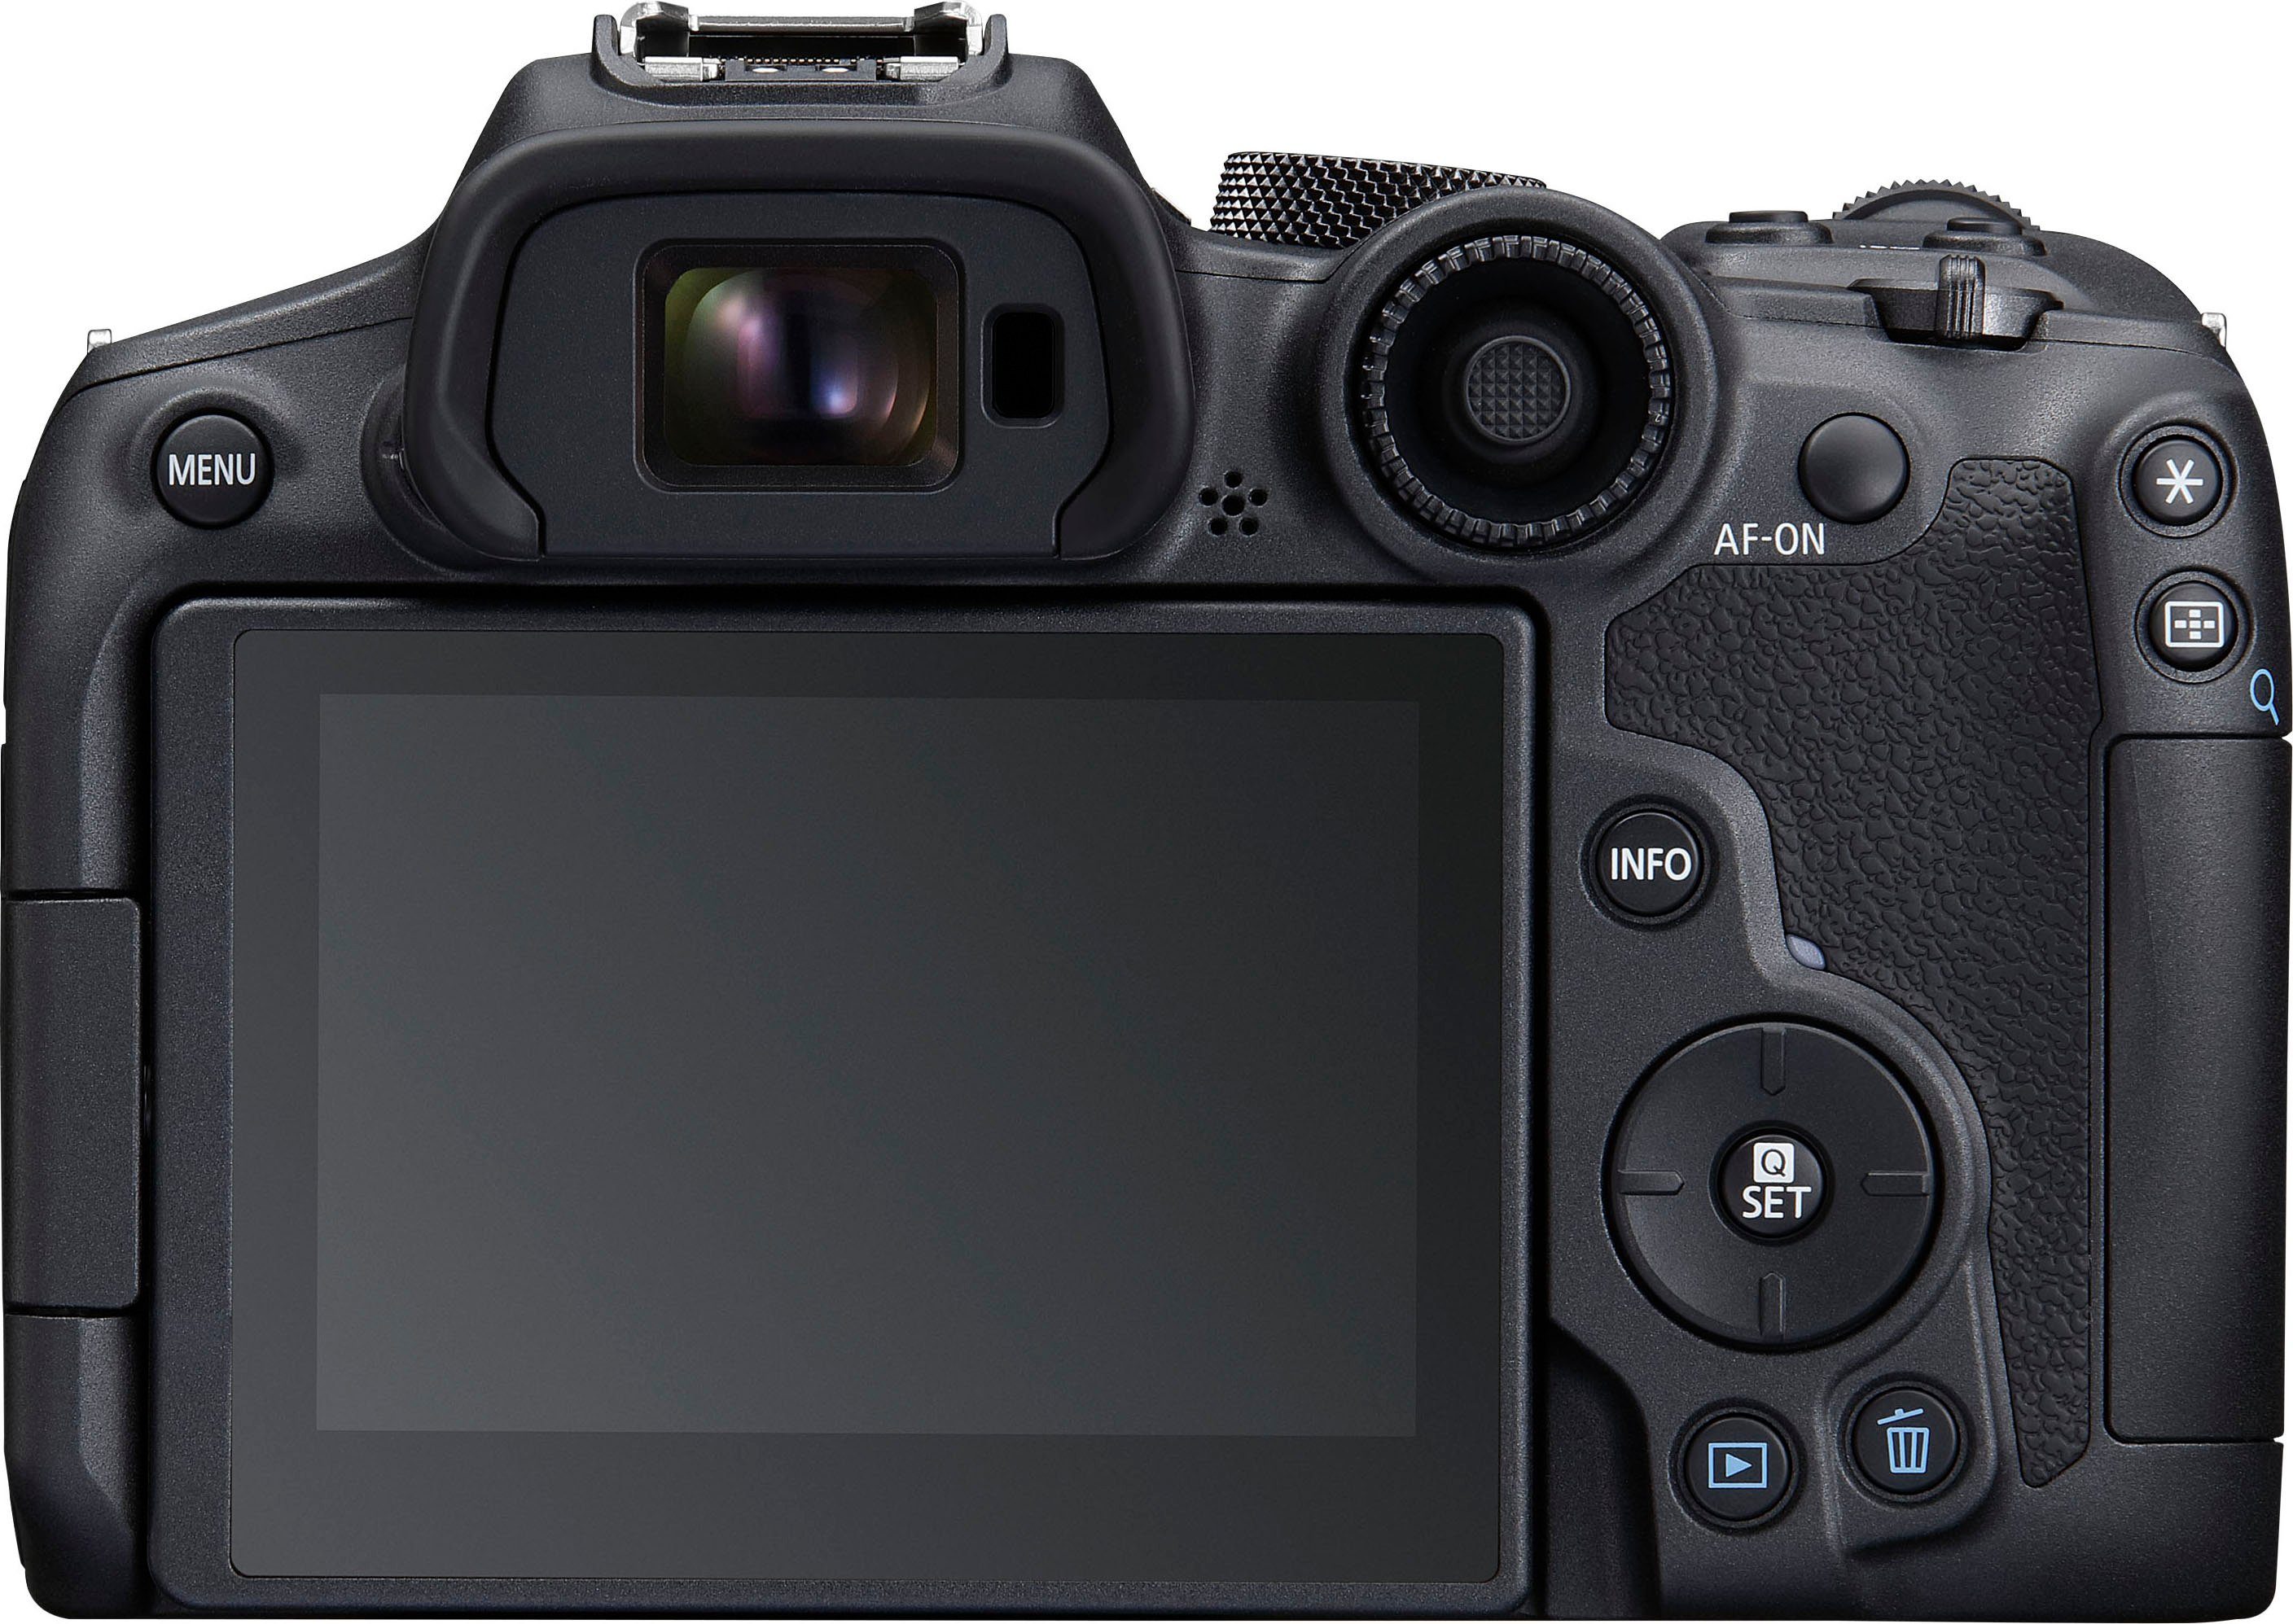 Body EOS Systemkamera WLAN) Bluetooth, R7 (32,5 Canon MP,